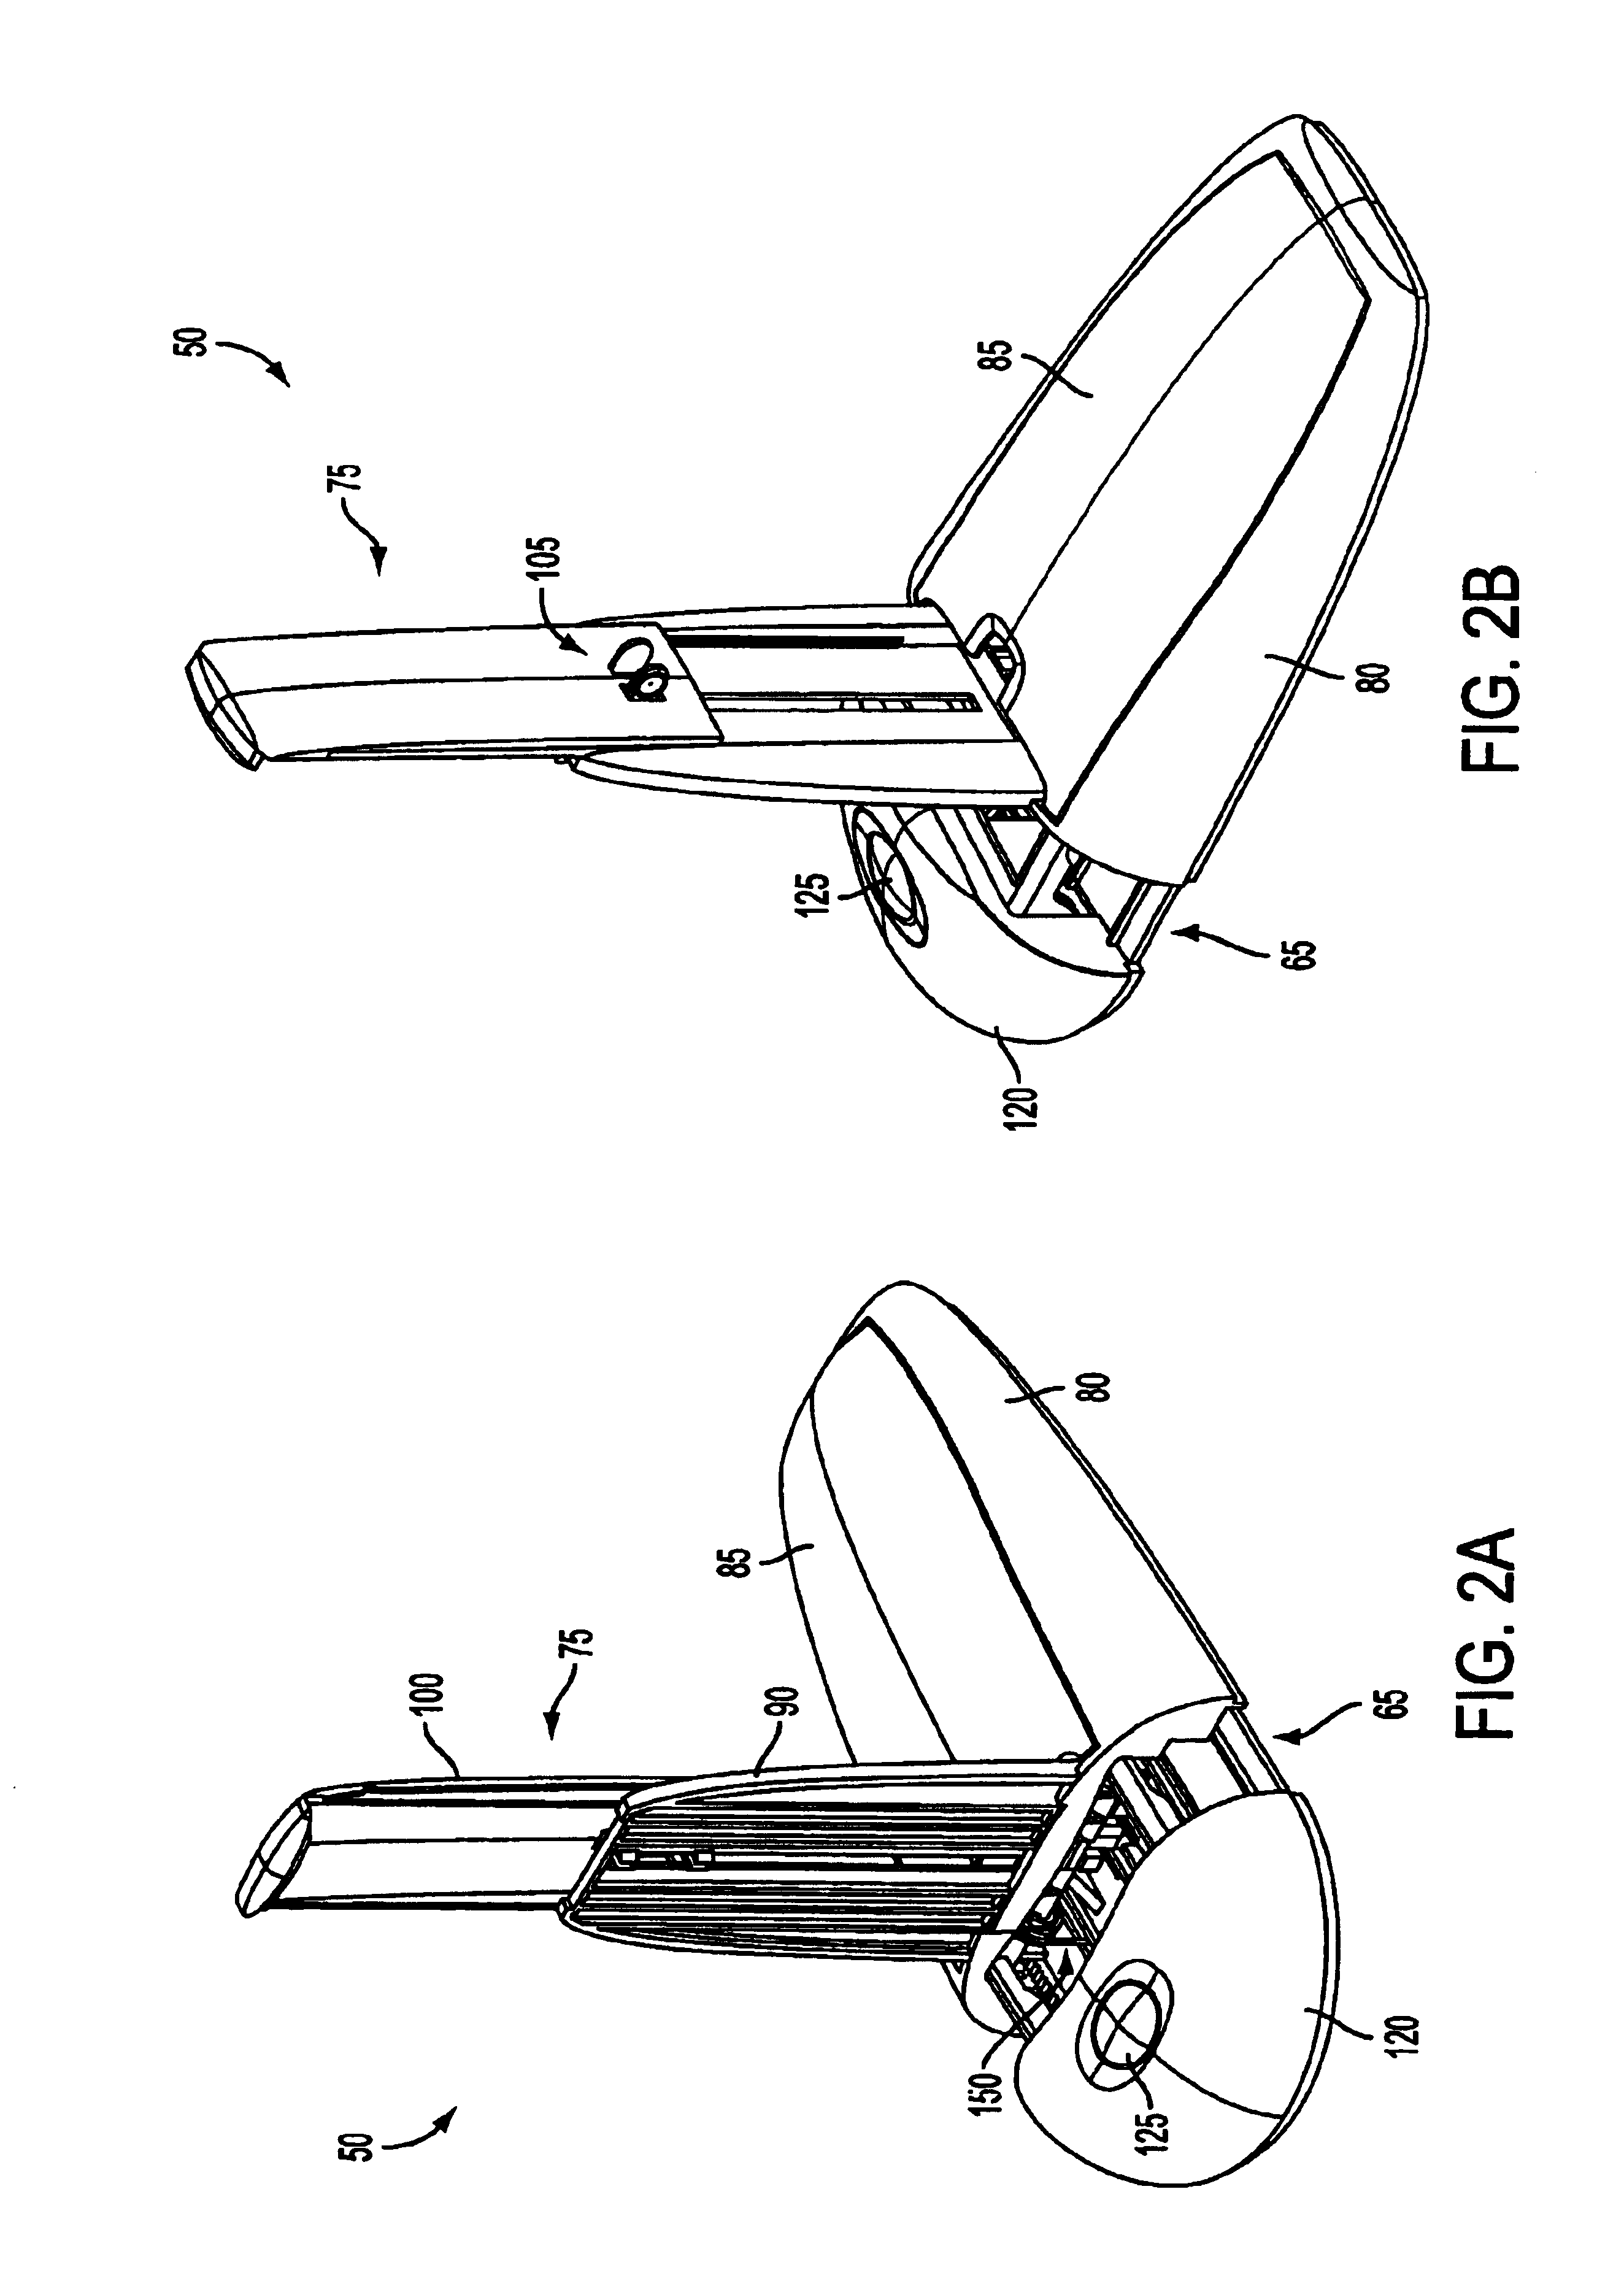 Portable computer pedestal method and apparatus